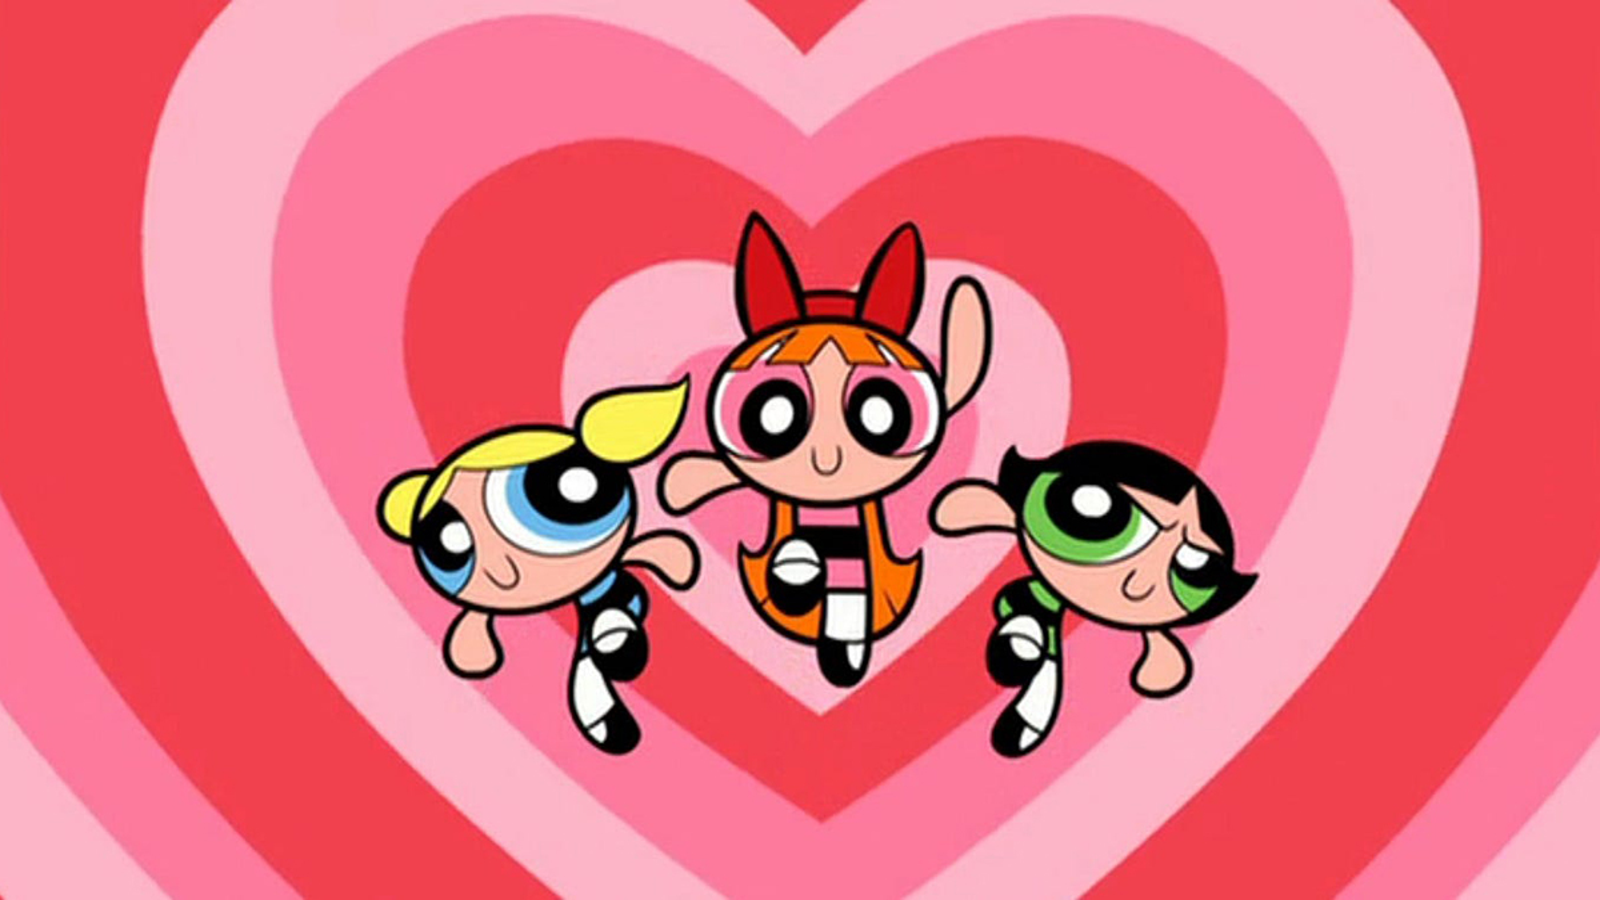 Powerpuff Girls renewed for season 2 on Cartoon Network